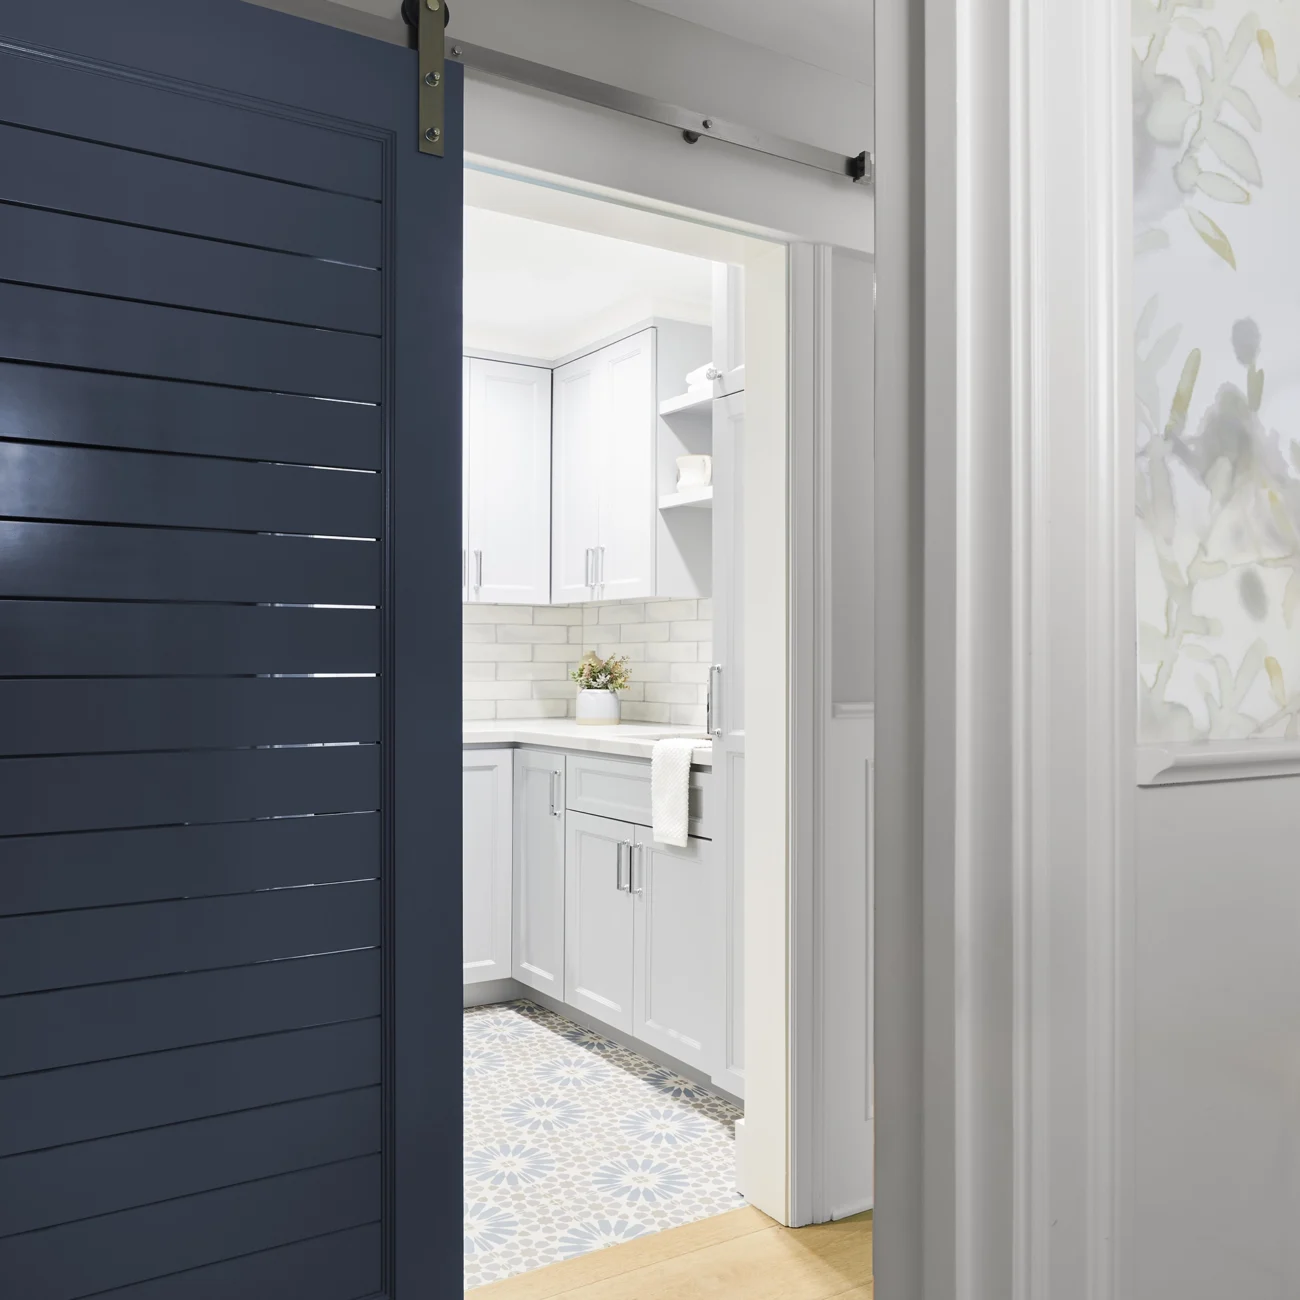 Christine Vroom Interiors Vigilance | Blue slatted barn door to conceal laundry room